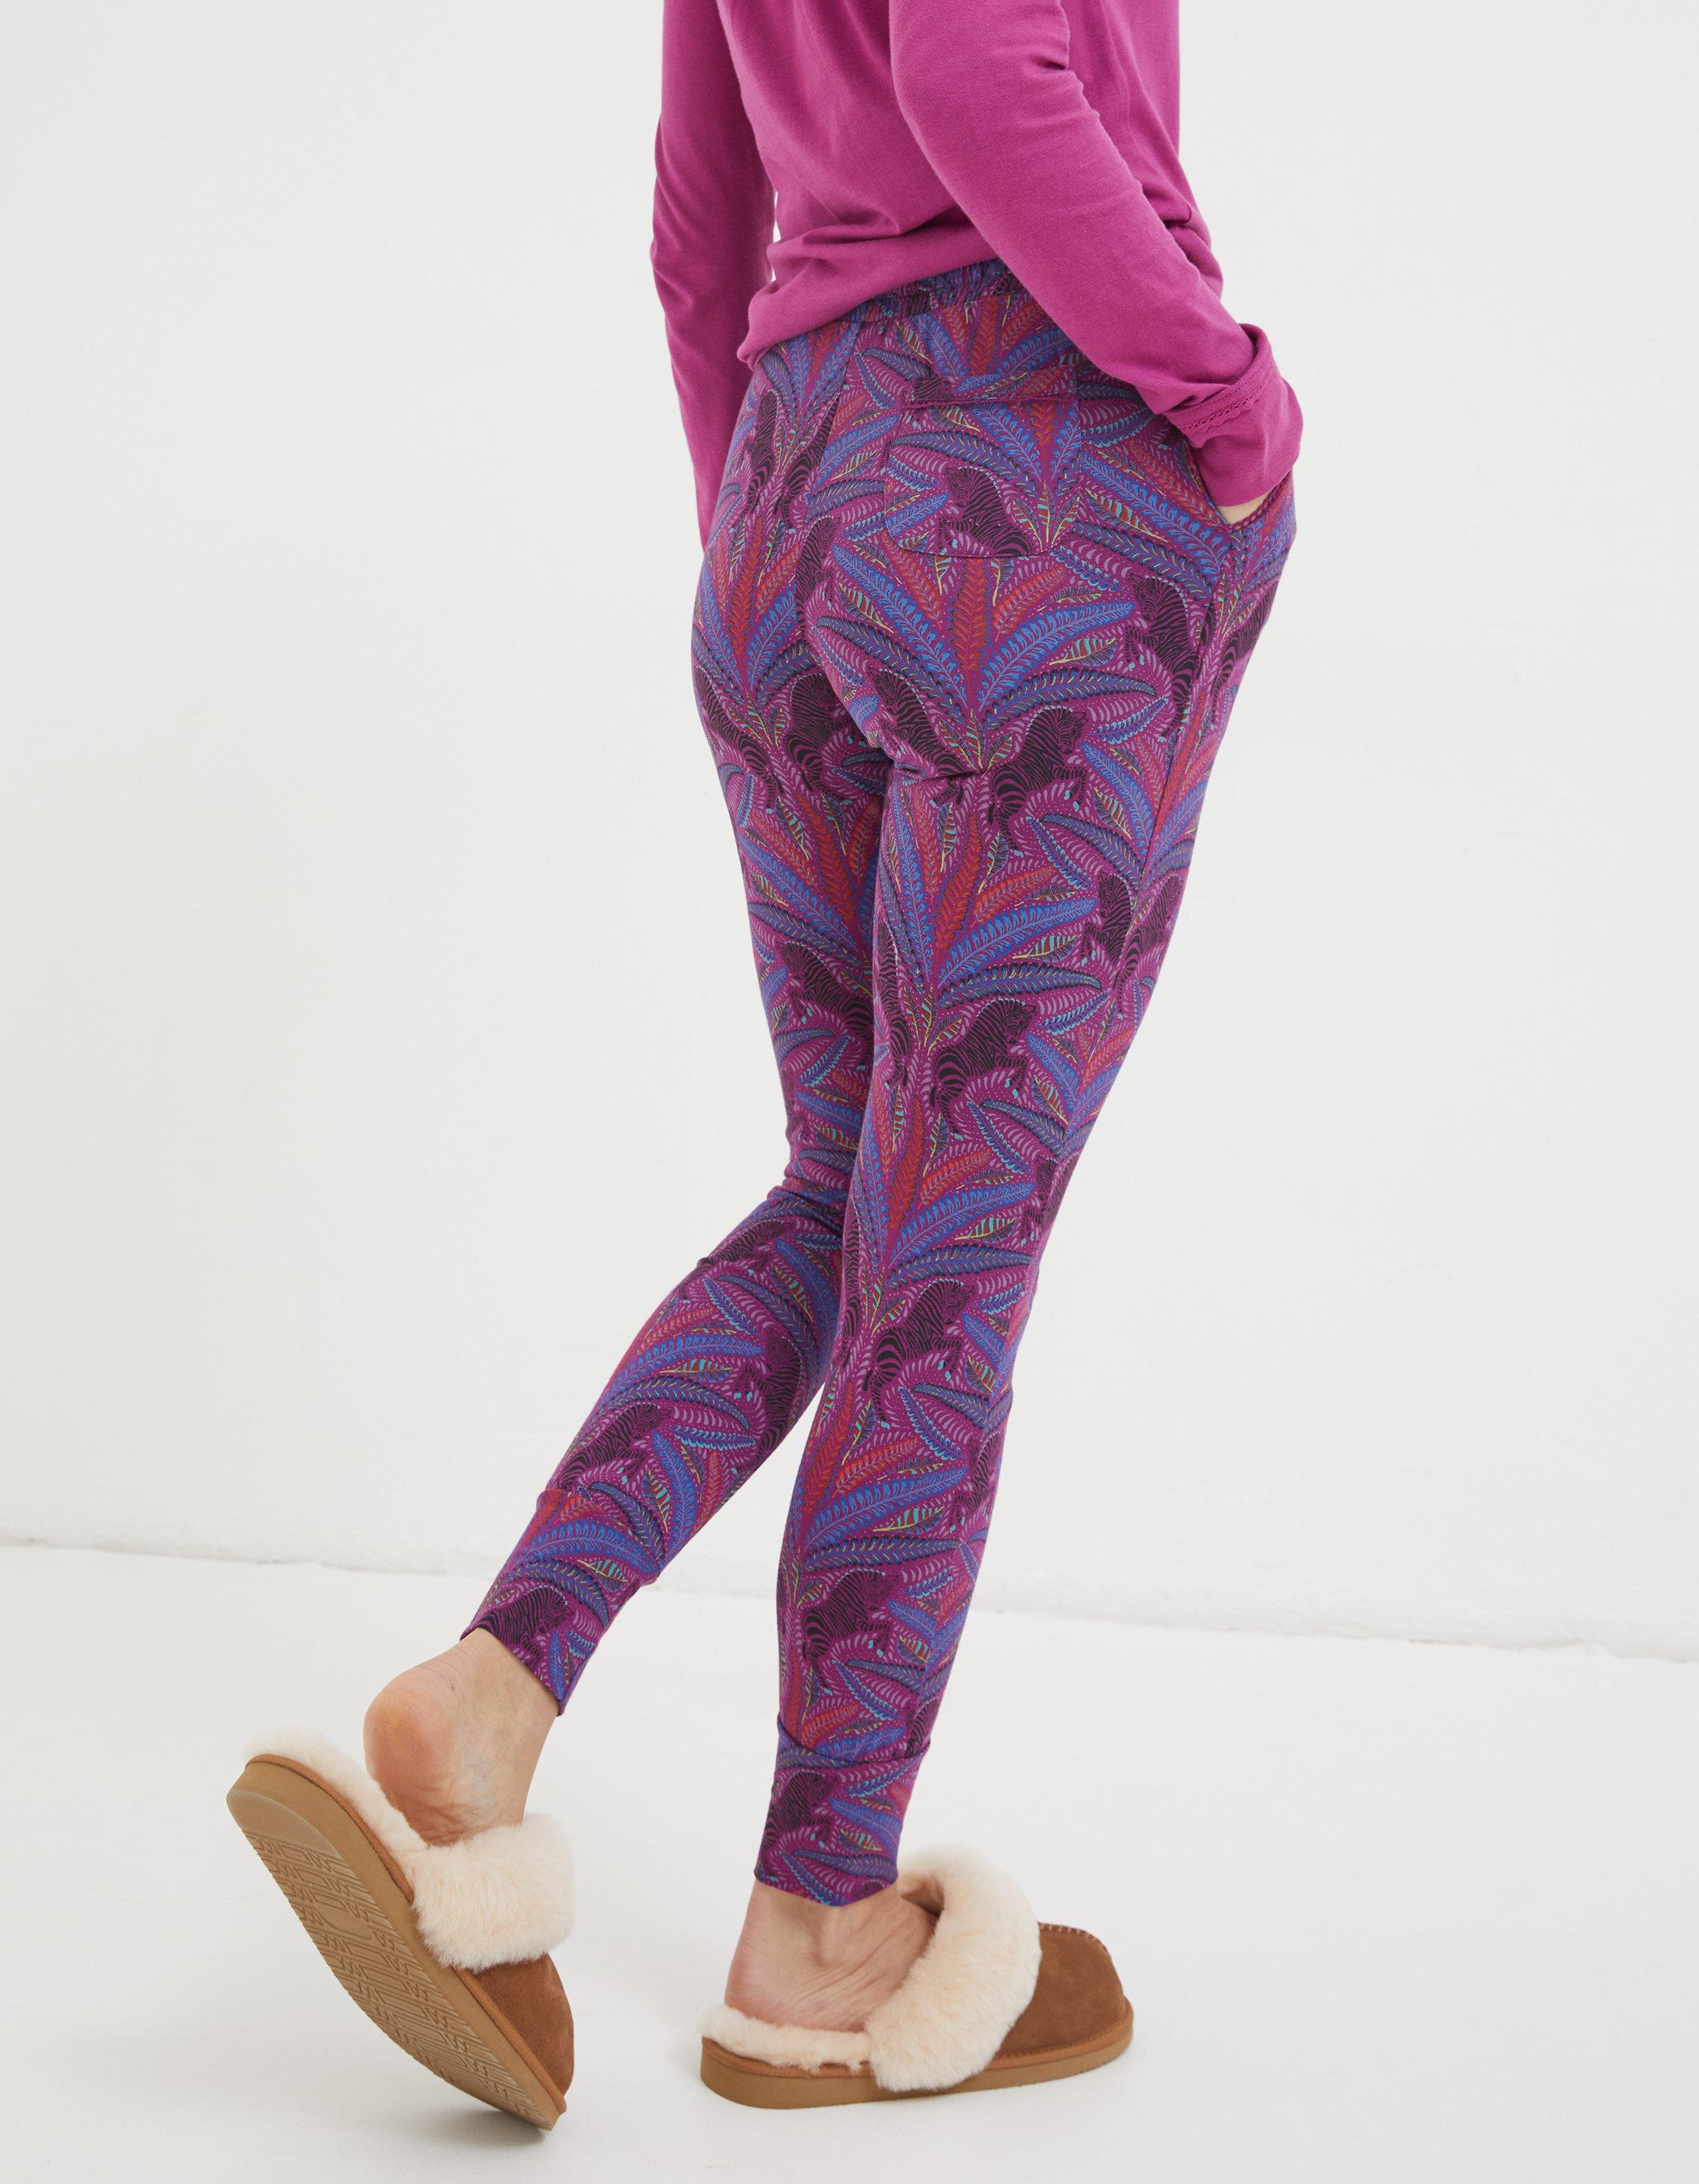 Ellie Zebra Leggings, Nightwear & Pajamas | FatFace.com